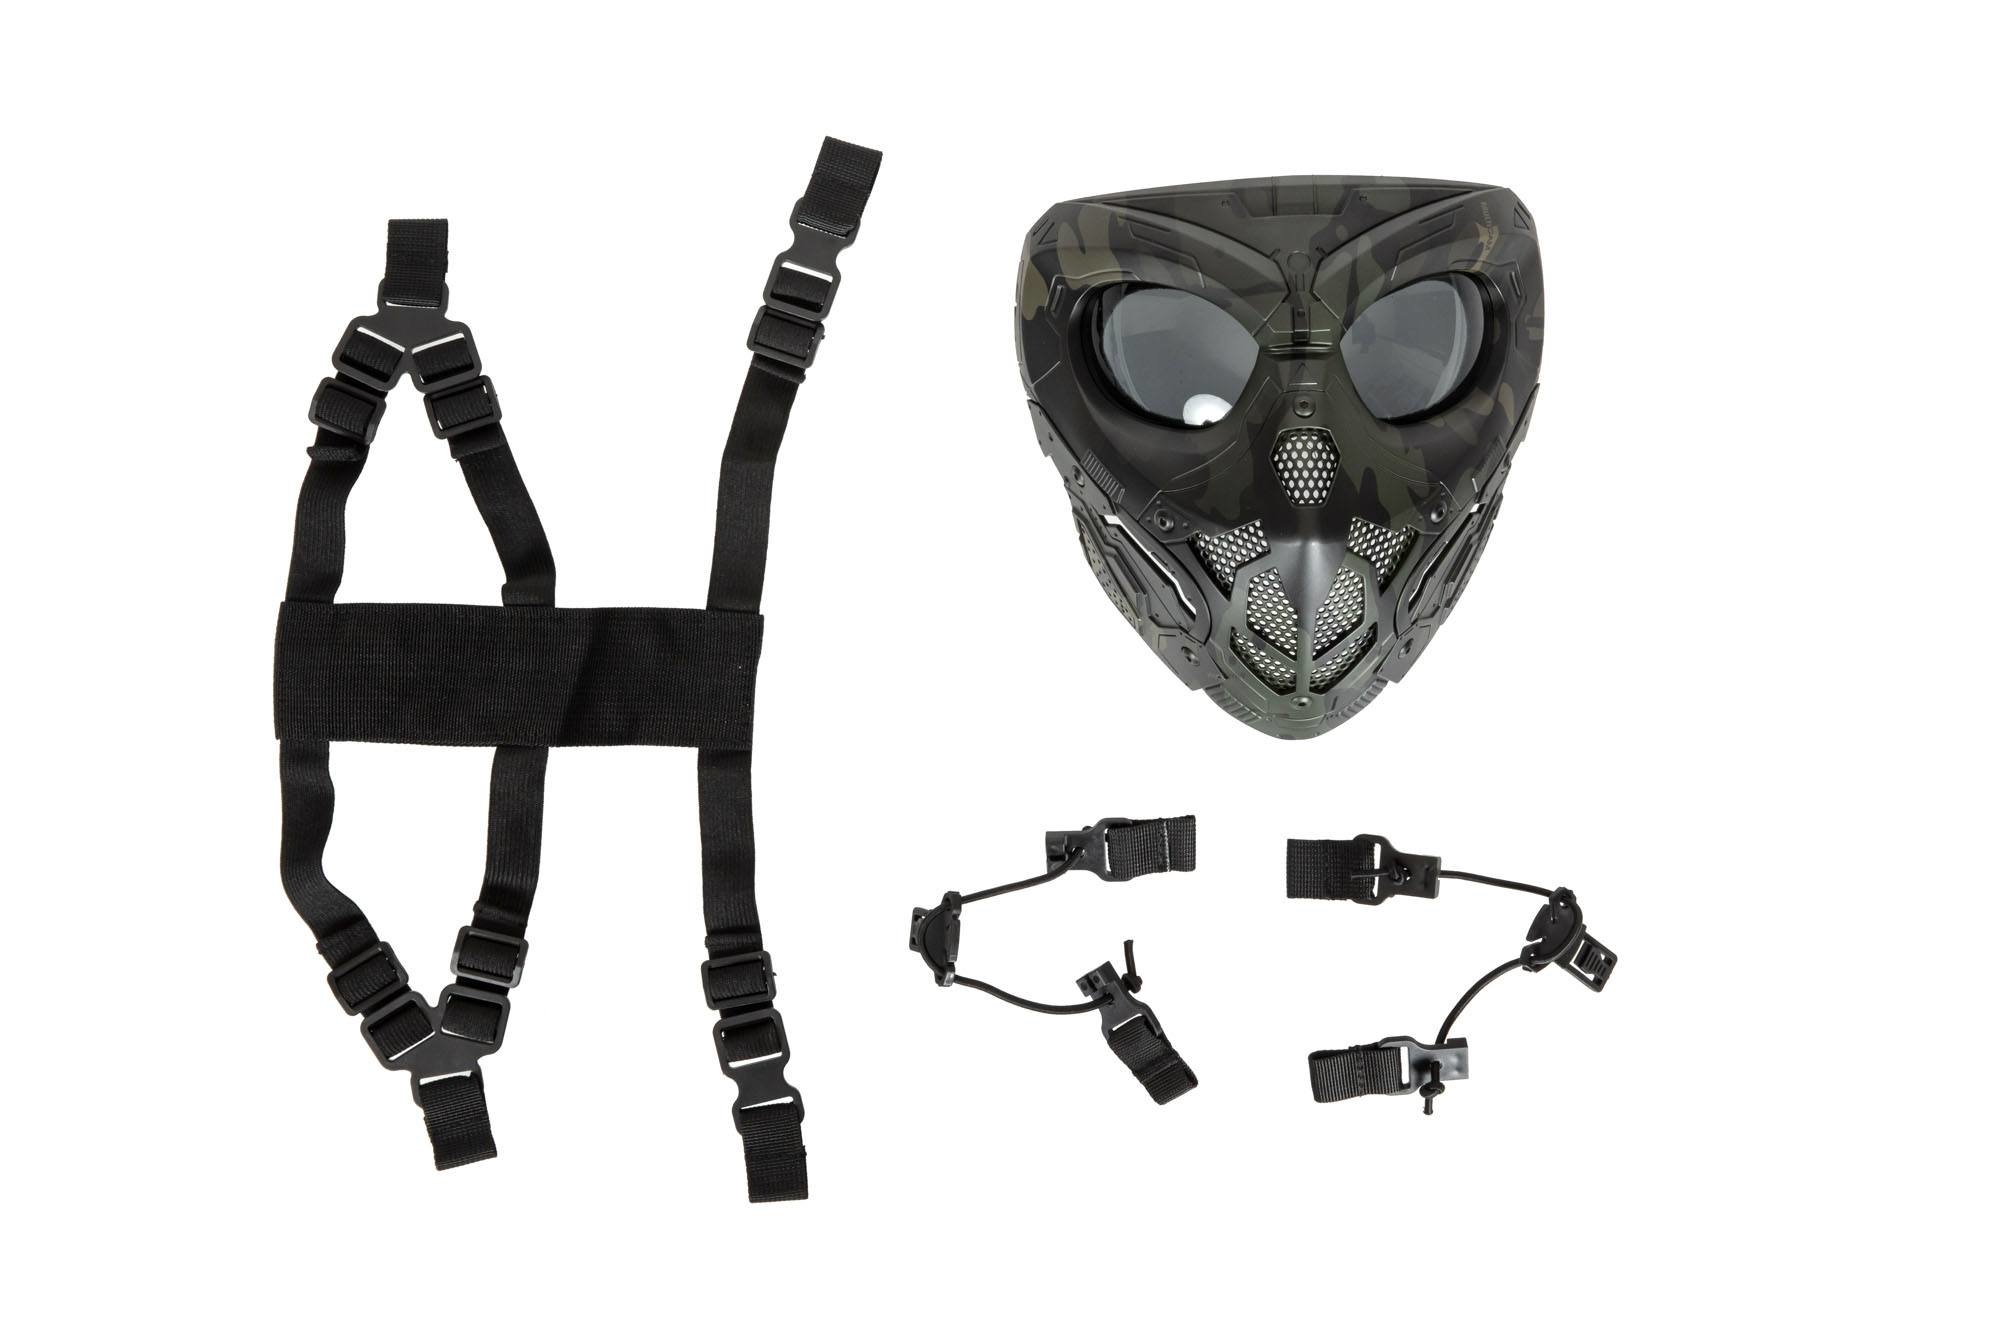 Ultimate Tactical Murker máscara protetora com montagem de capacete